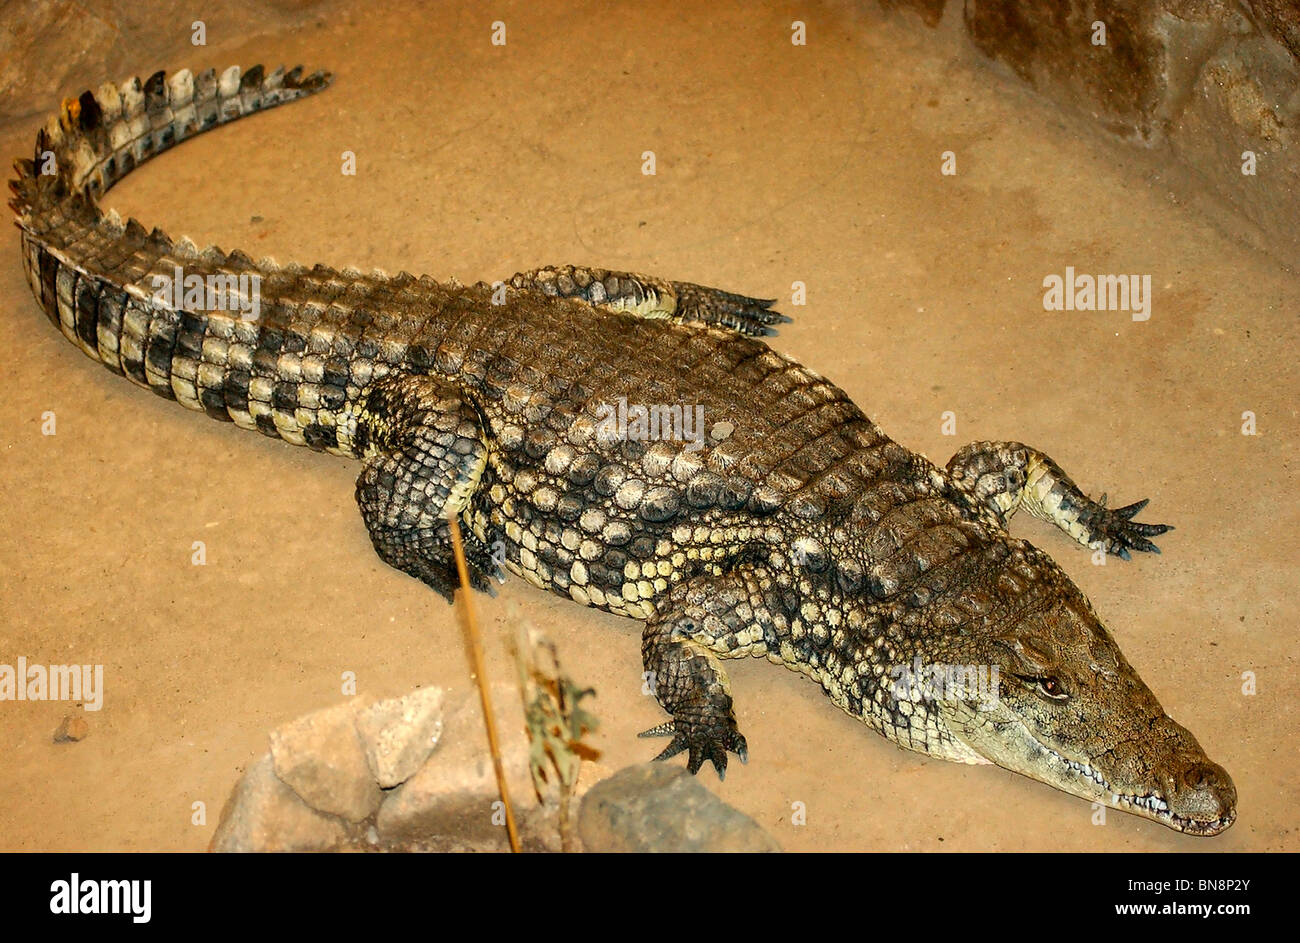 Crocodile of the Nilo Stock Photo - Alamy